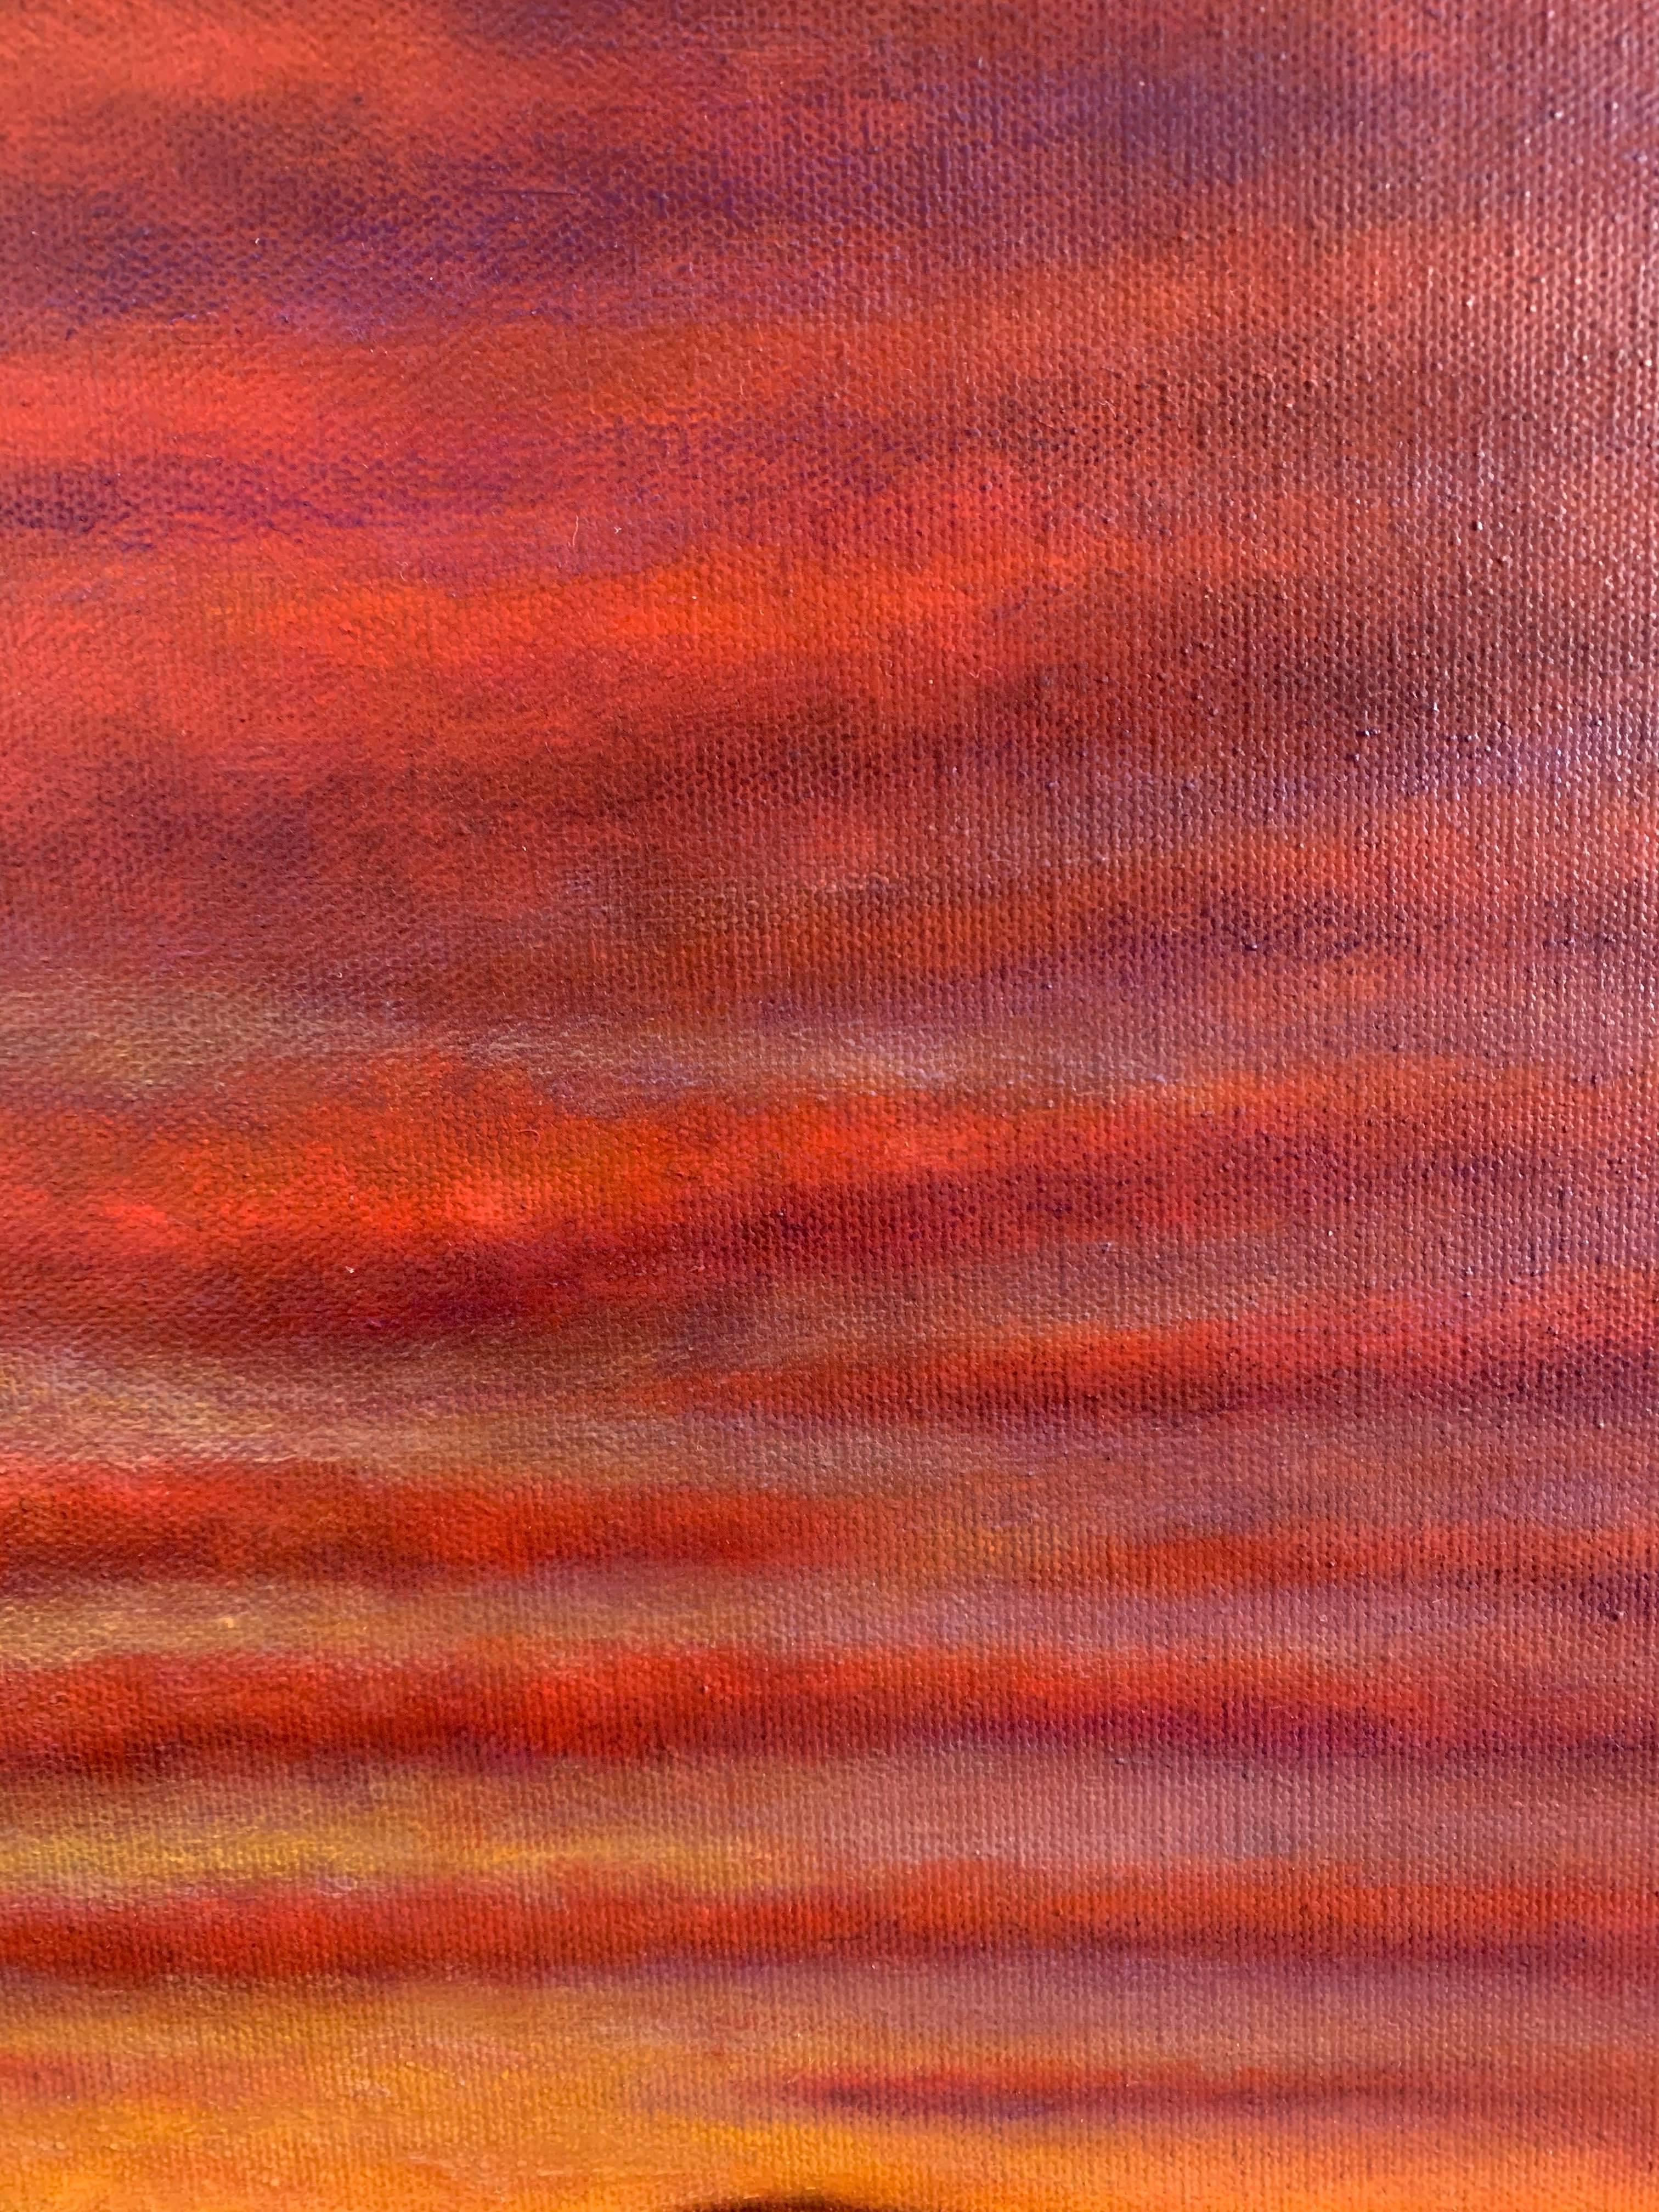 krakatoa sunset paintings